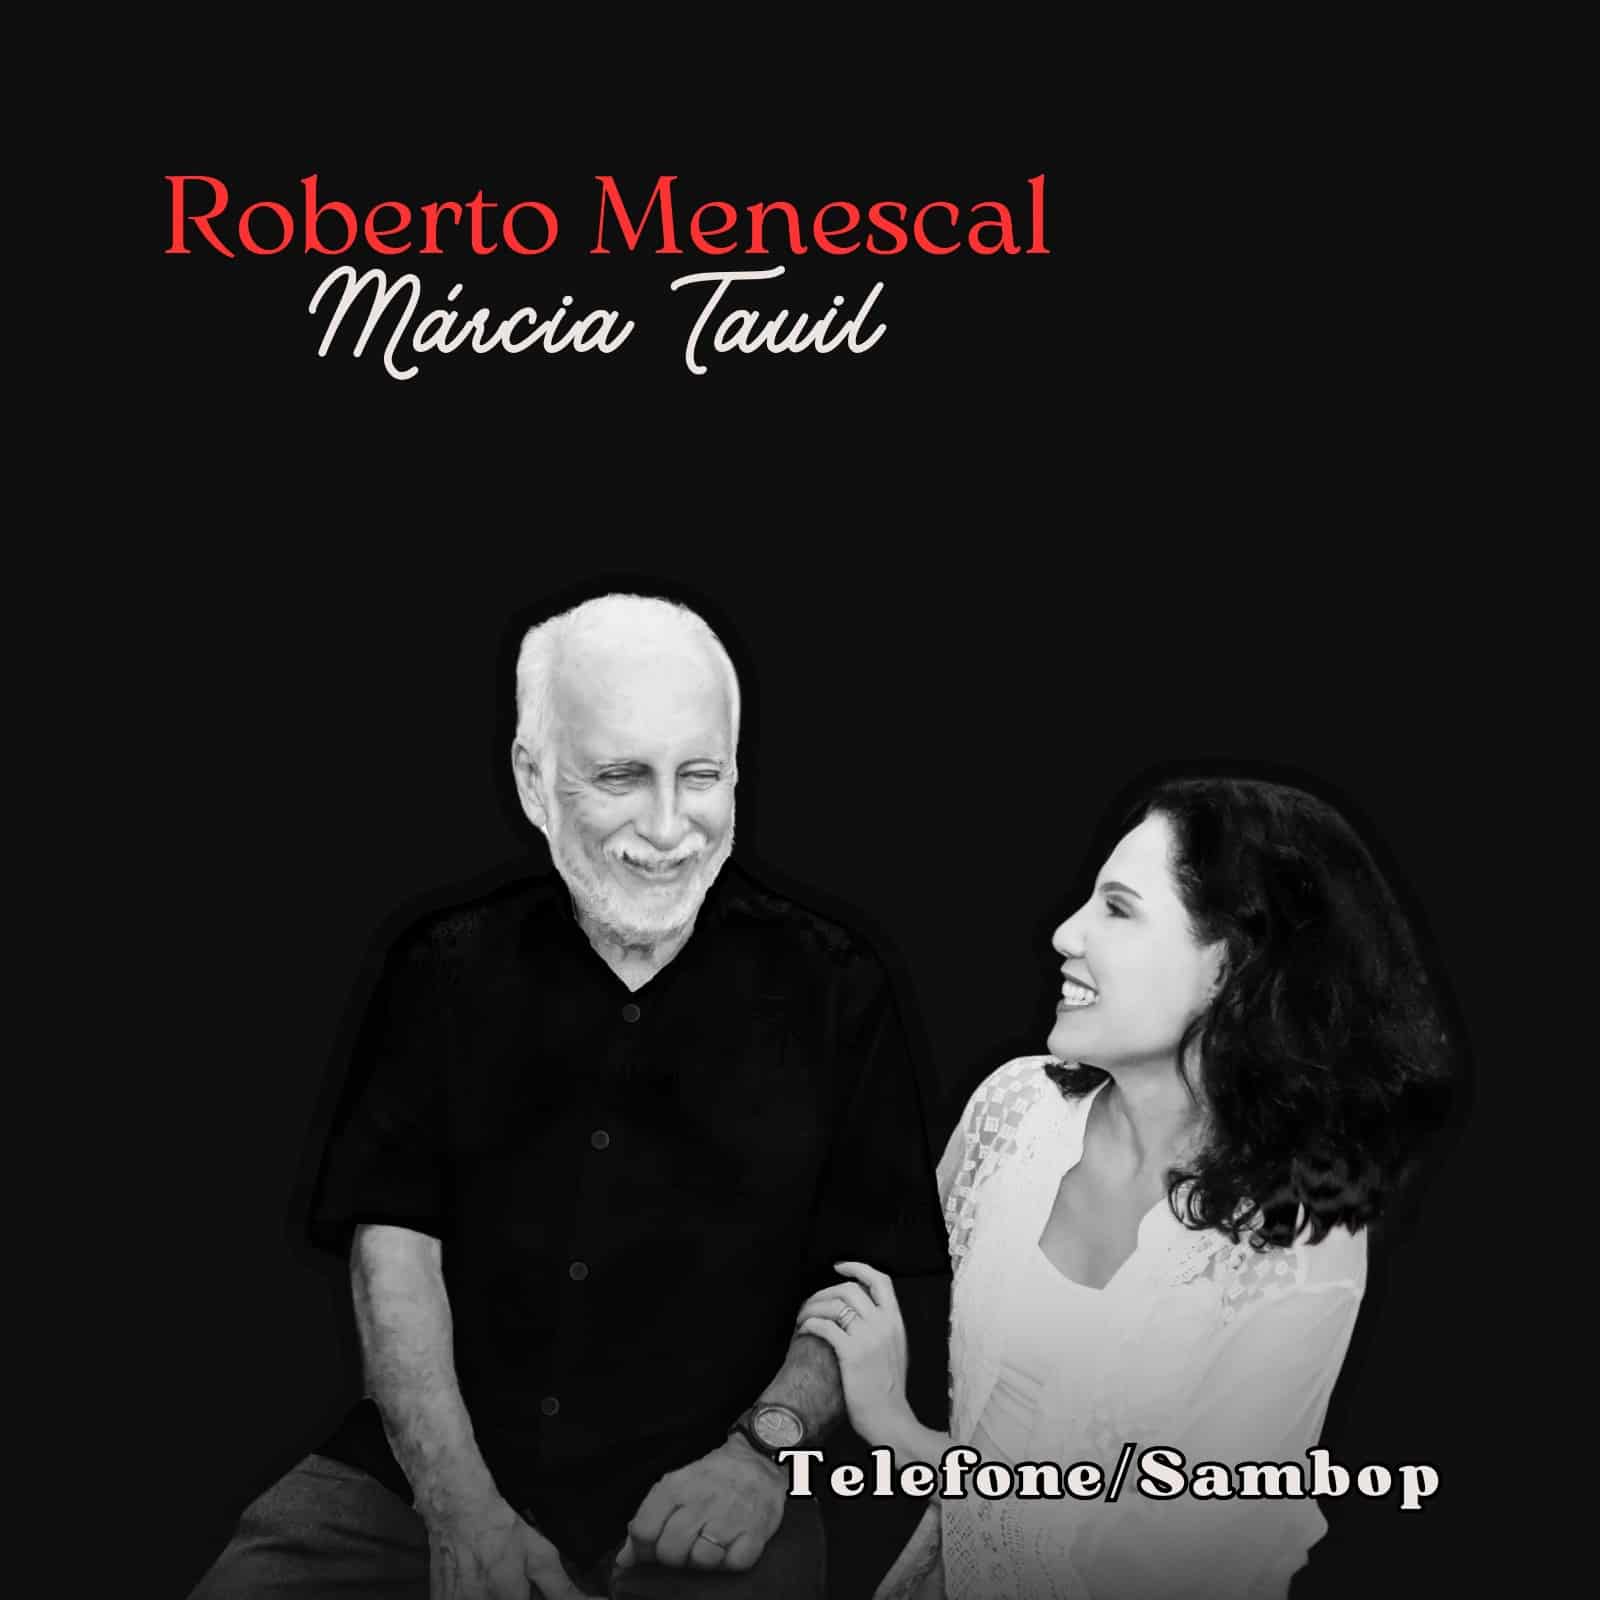 revistaprosaversoearte.com - Márcia Tauil e Roberto Menescal lançam single 'Telefone/Sambop'